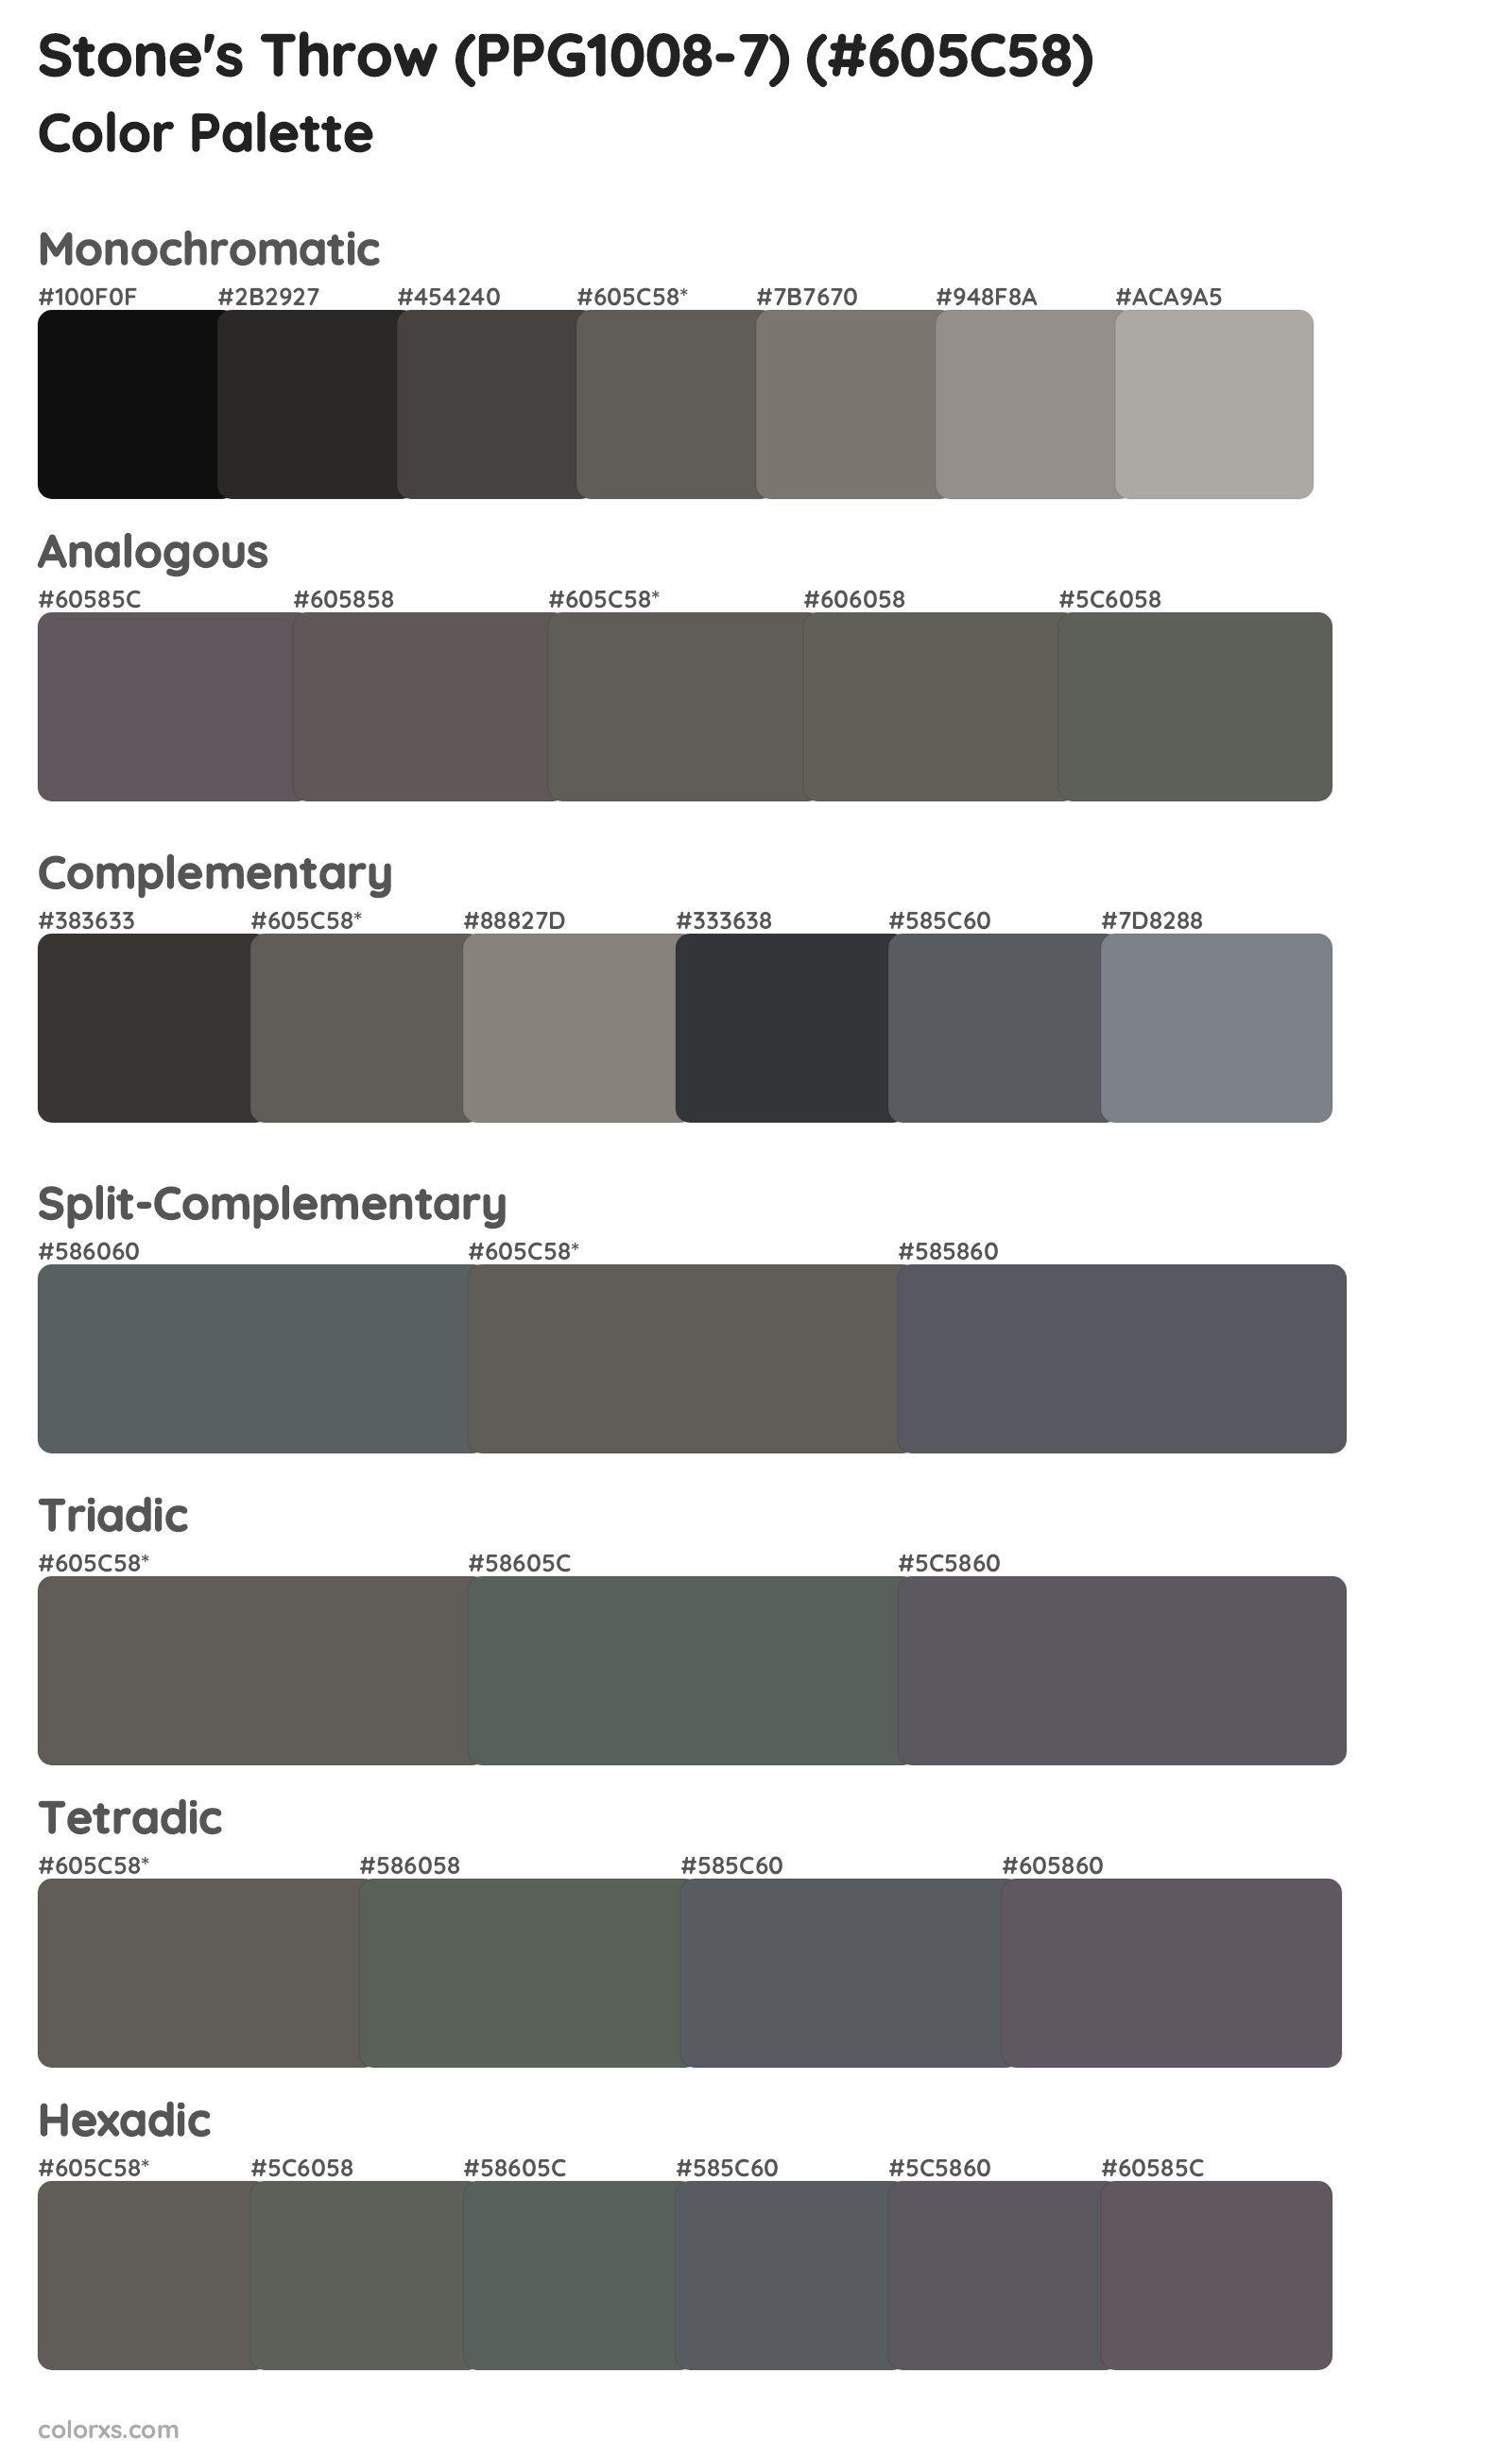 Stone's Throw (PPG1008-7) Color Scheme Palettes